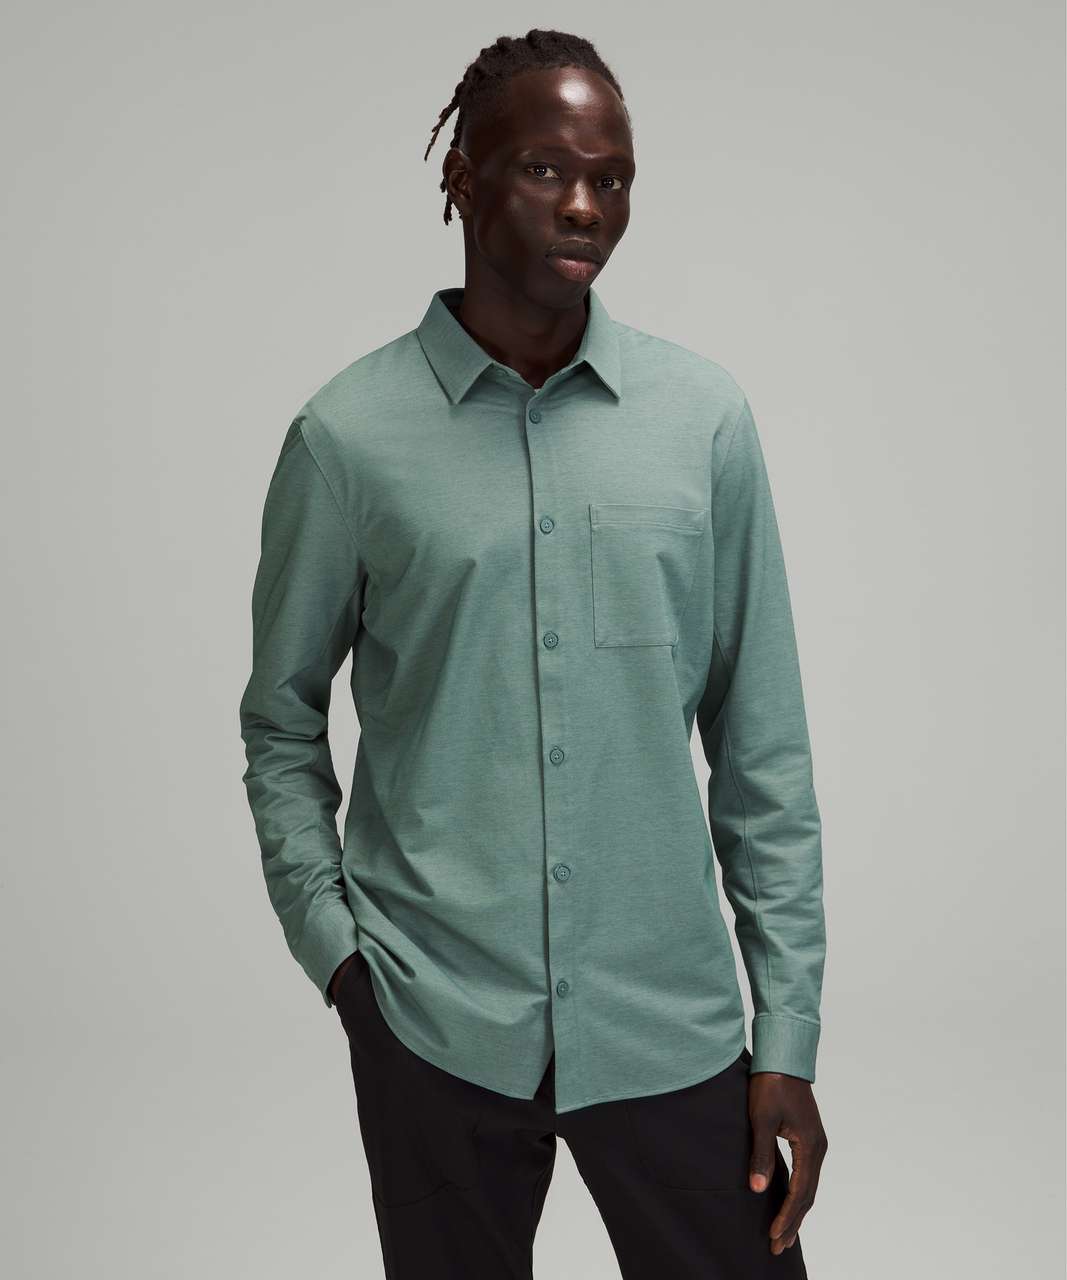 Sage Green Top - Button-Up Top - Long Sleeve Top - Top - Lulus